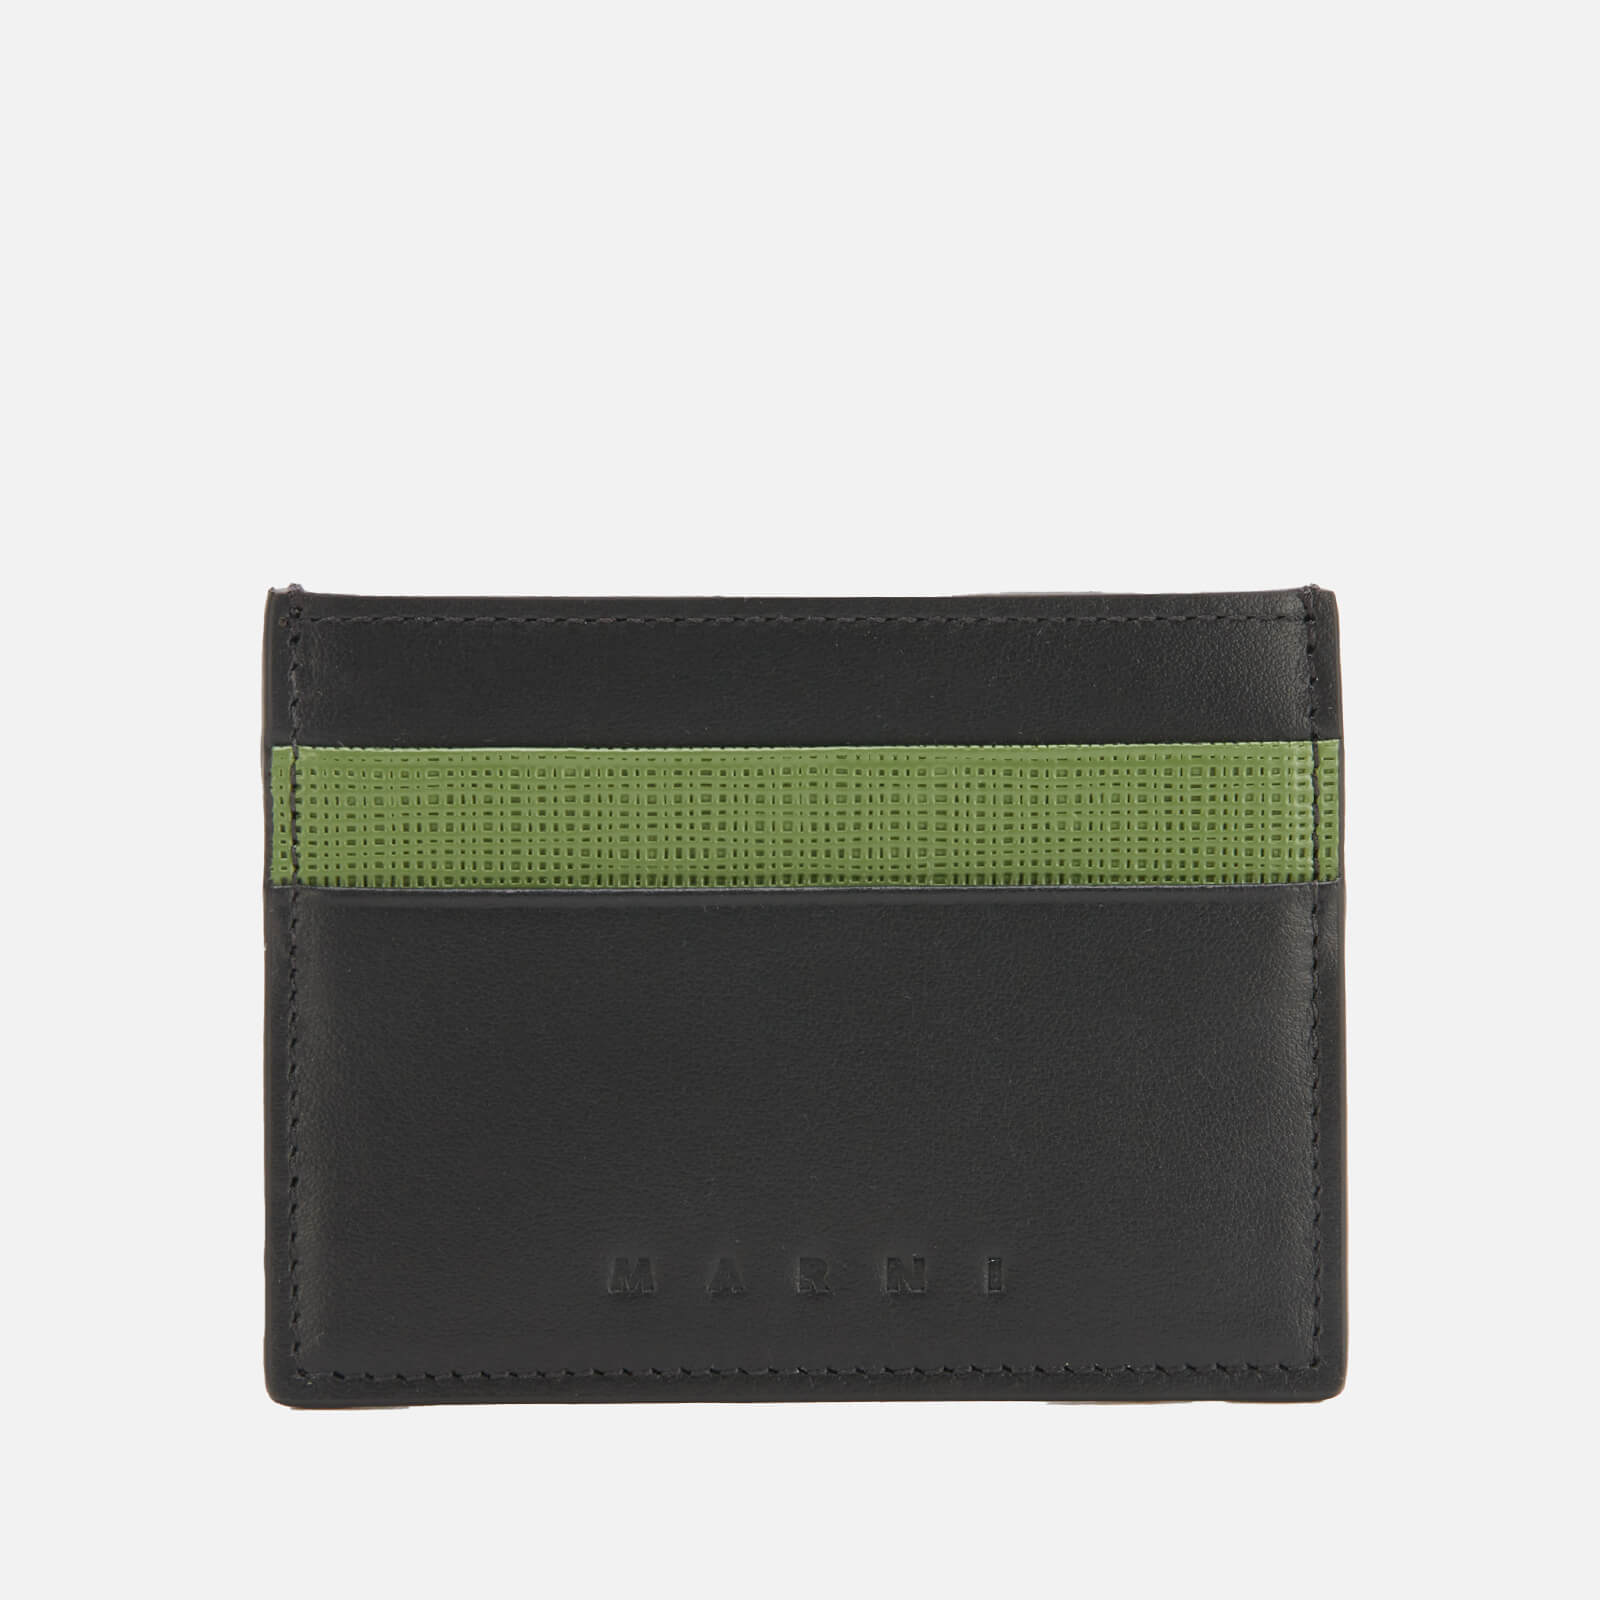 Marni Men's Credit Card Holder - Tea Green/Black